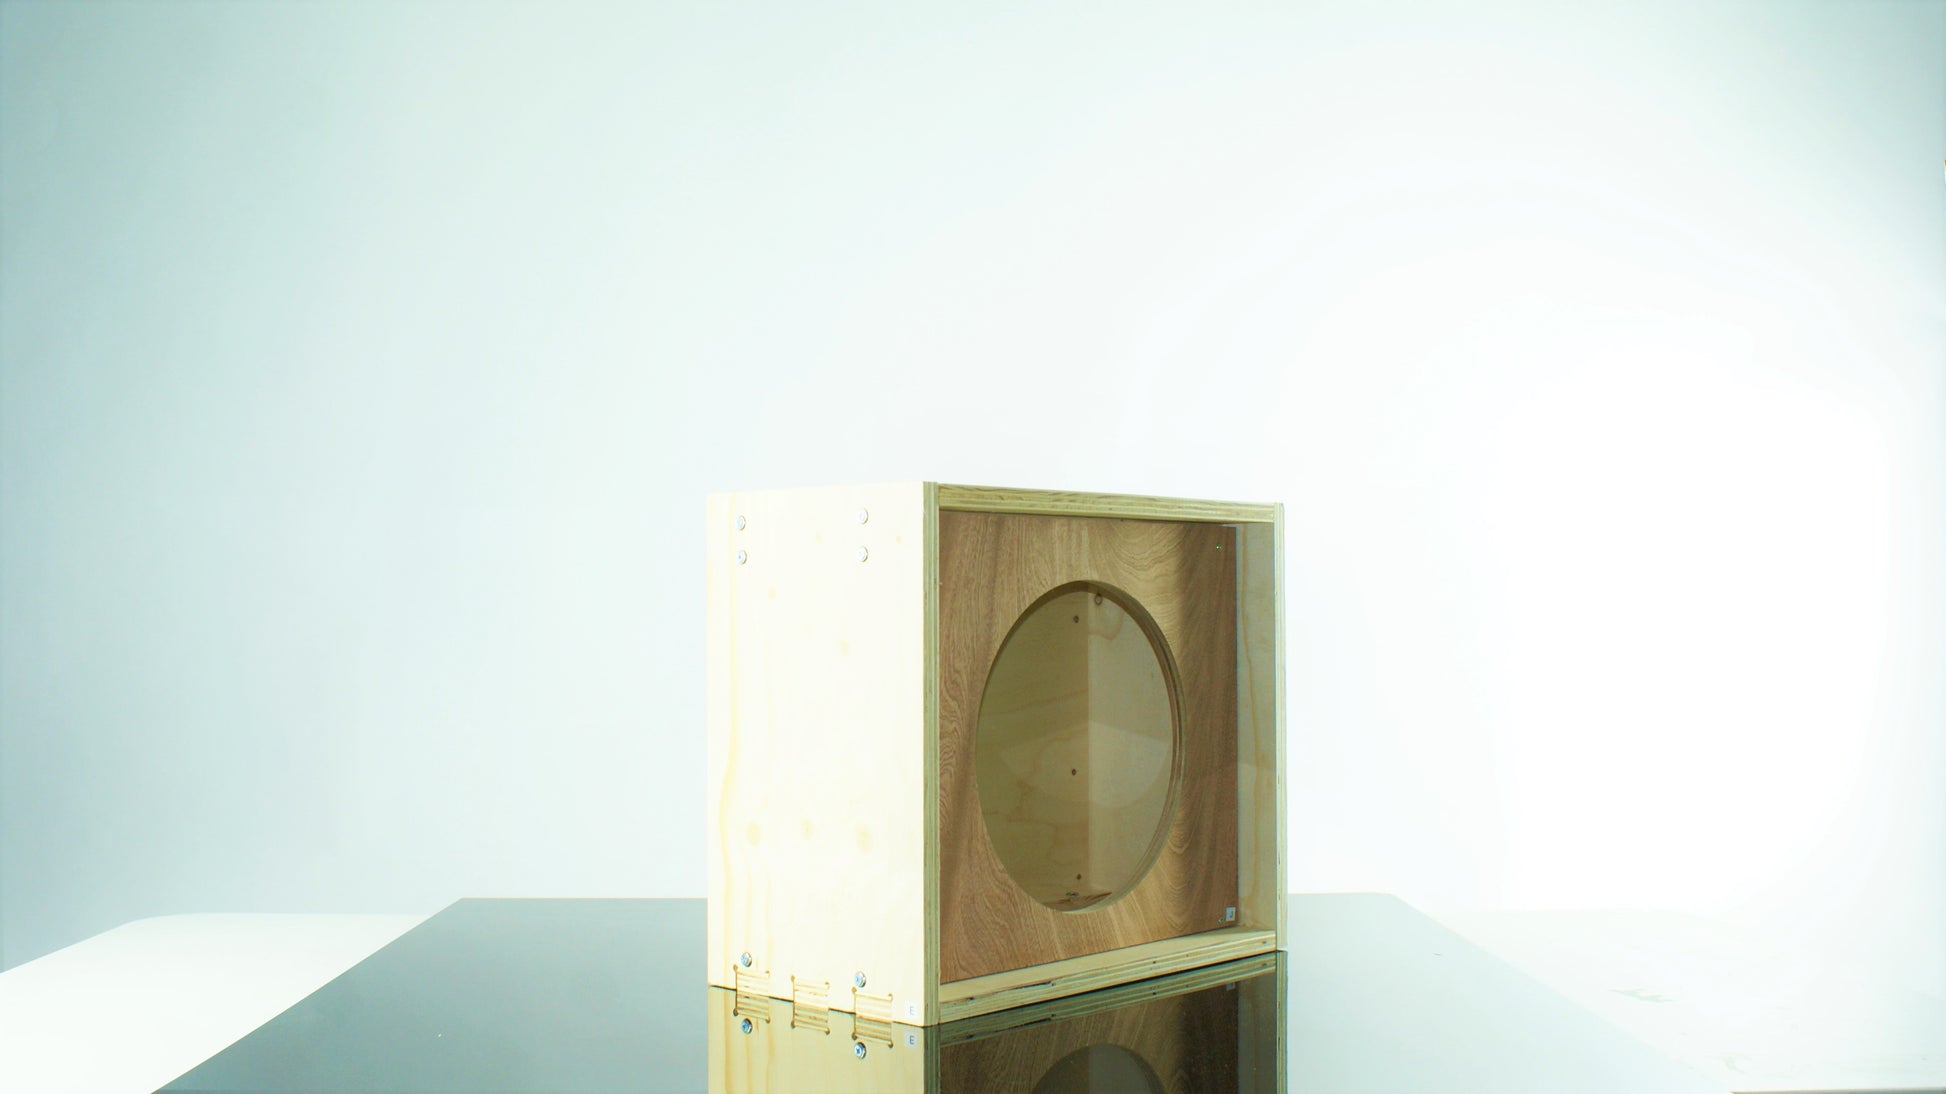 1x12" 18mm Guitar Bass Speaker Cabinet - DIY Self Build Kit Success